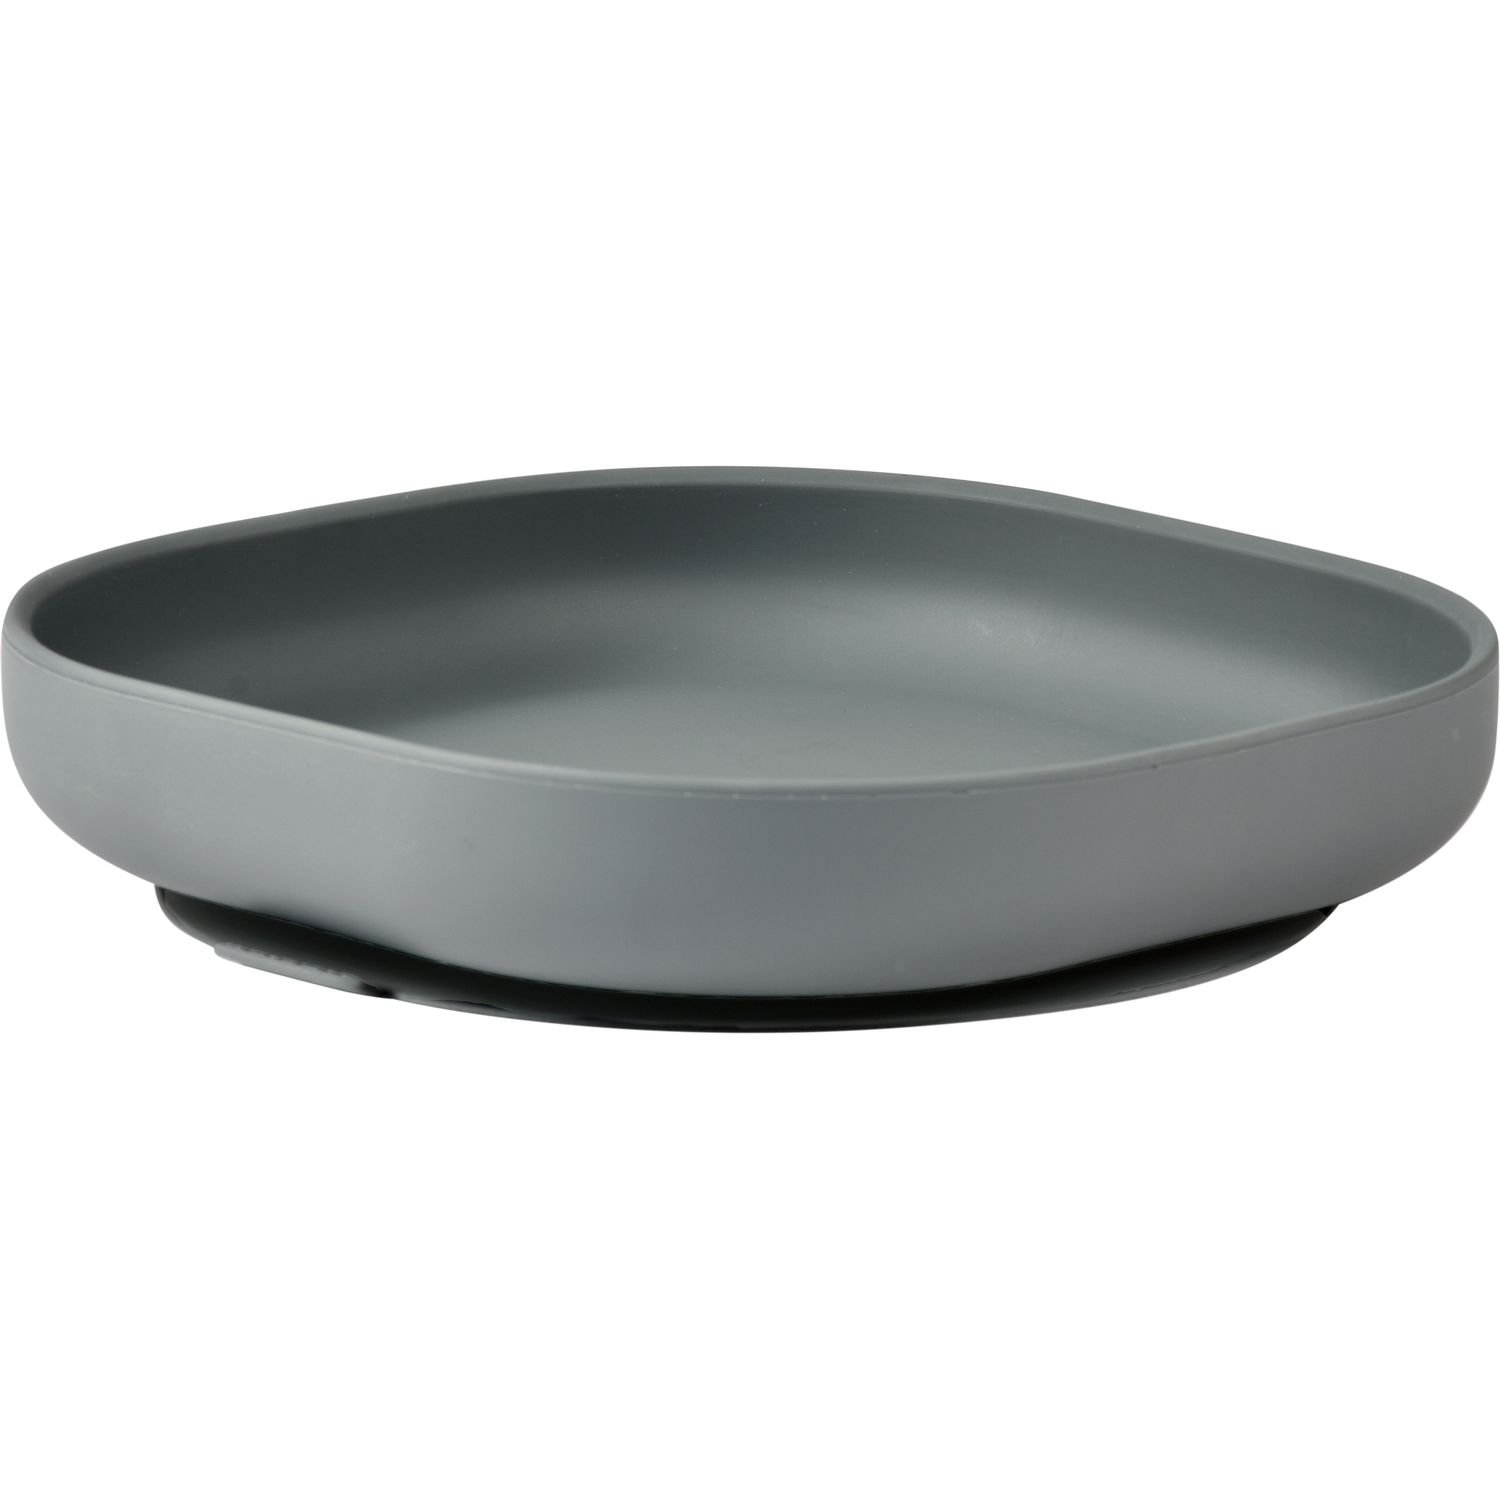 Силиконовая тарелка на присоске Beaba Silicone Suction Plate, серая (913550) - фото 1